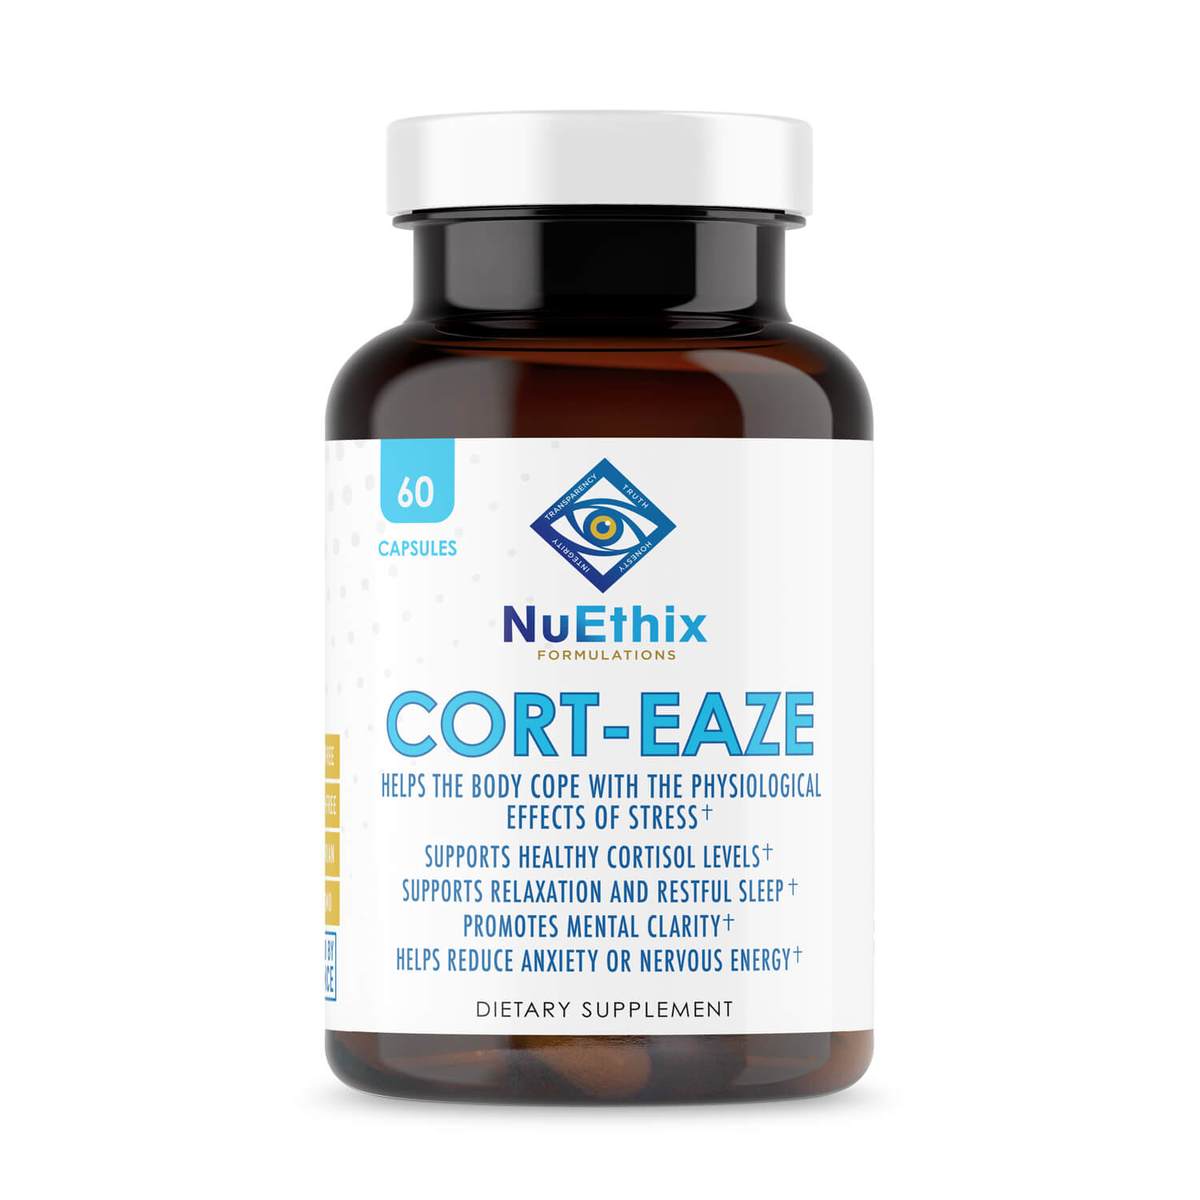 NUETHIX Cort-Eaze